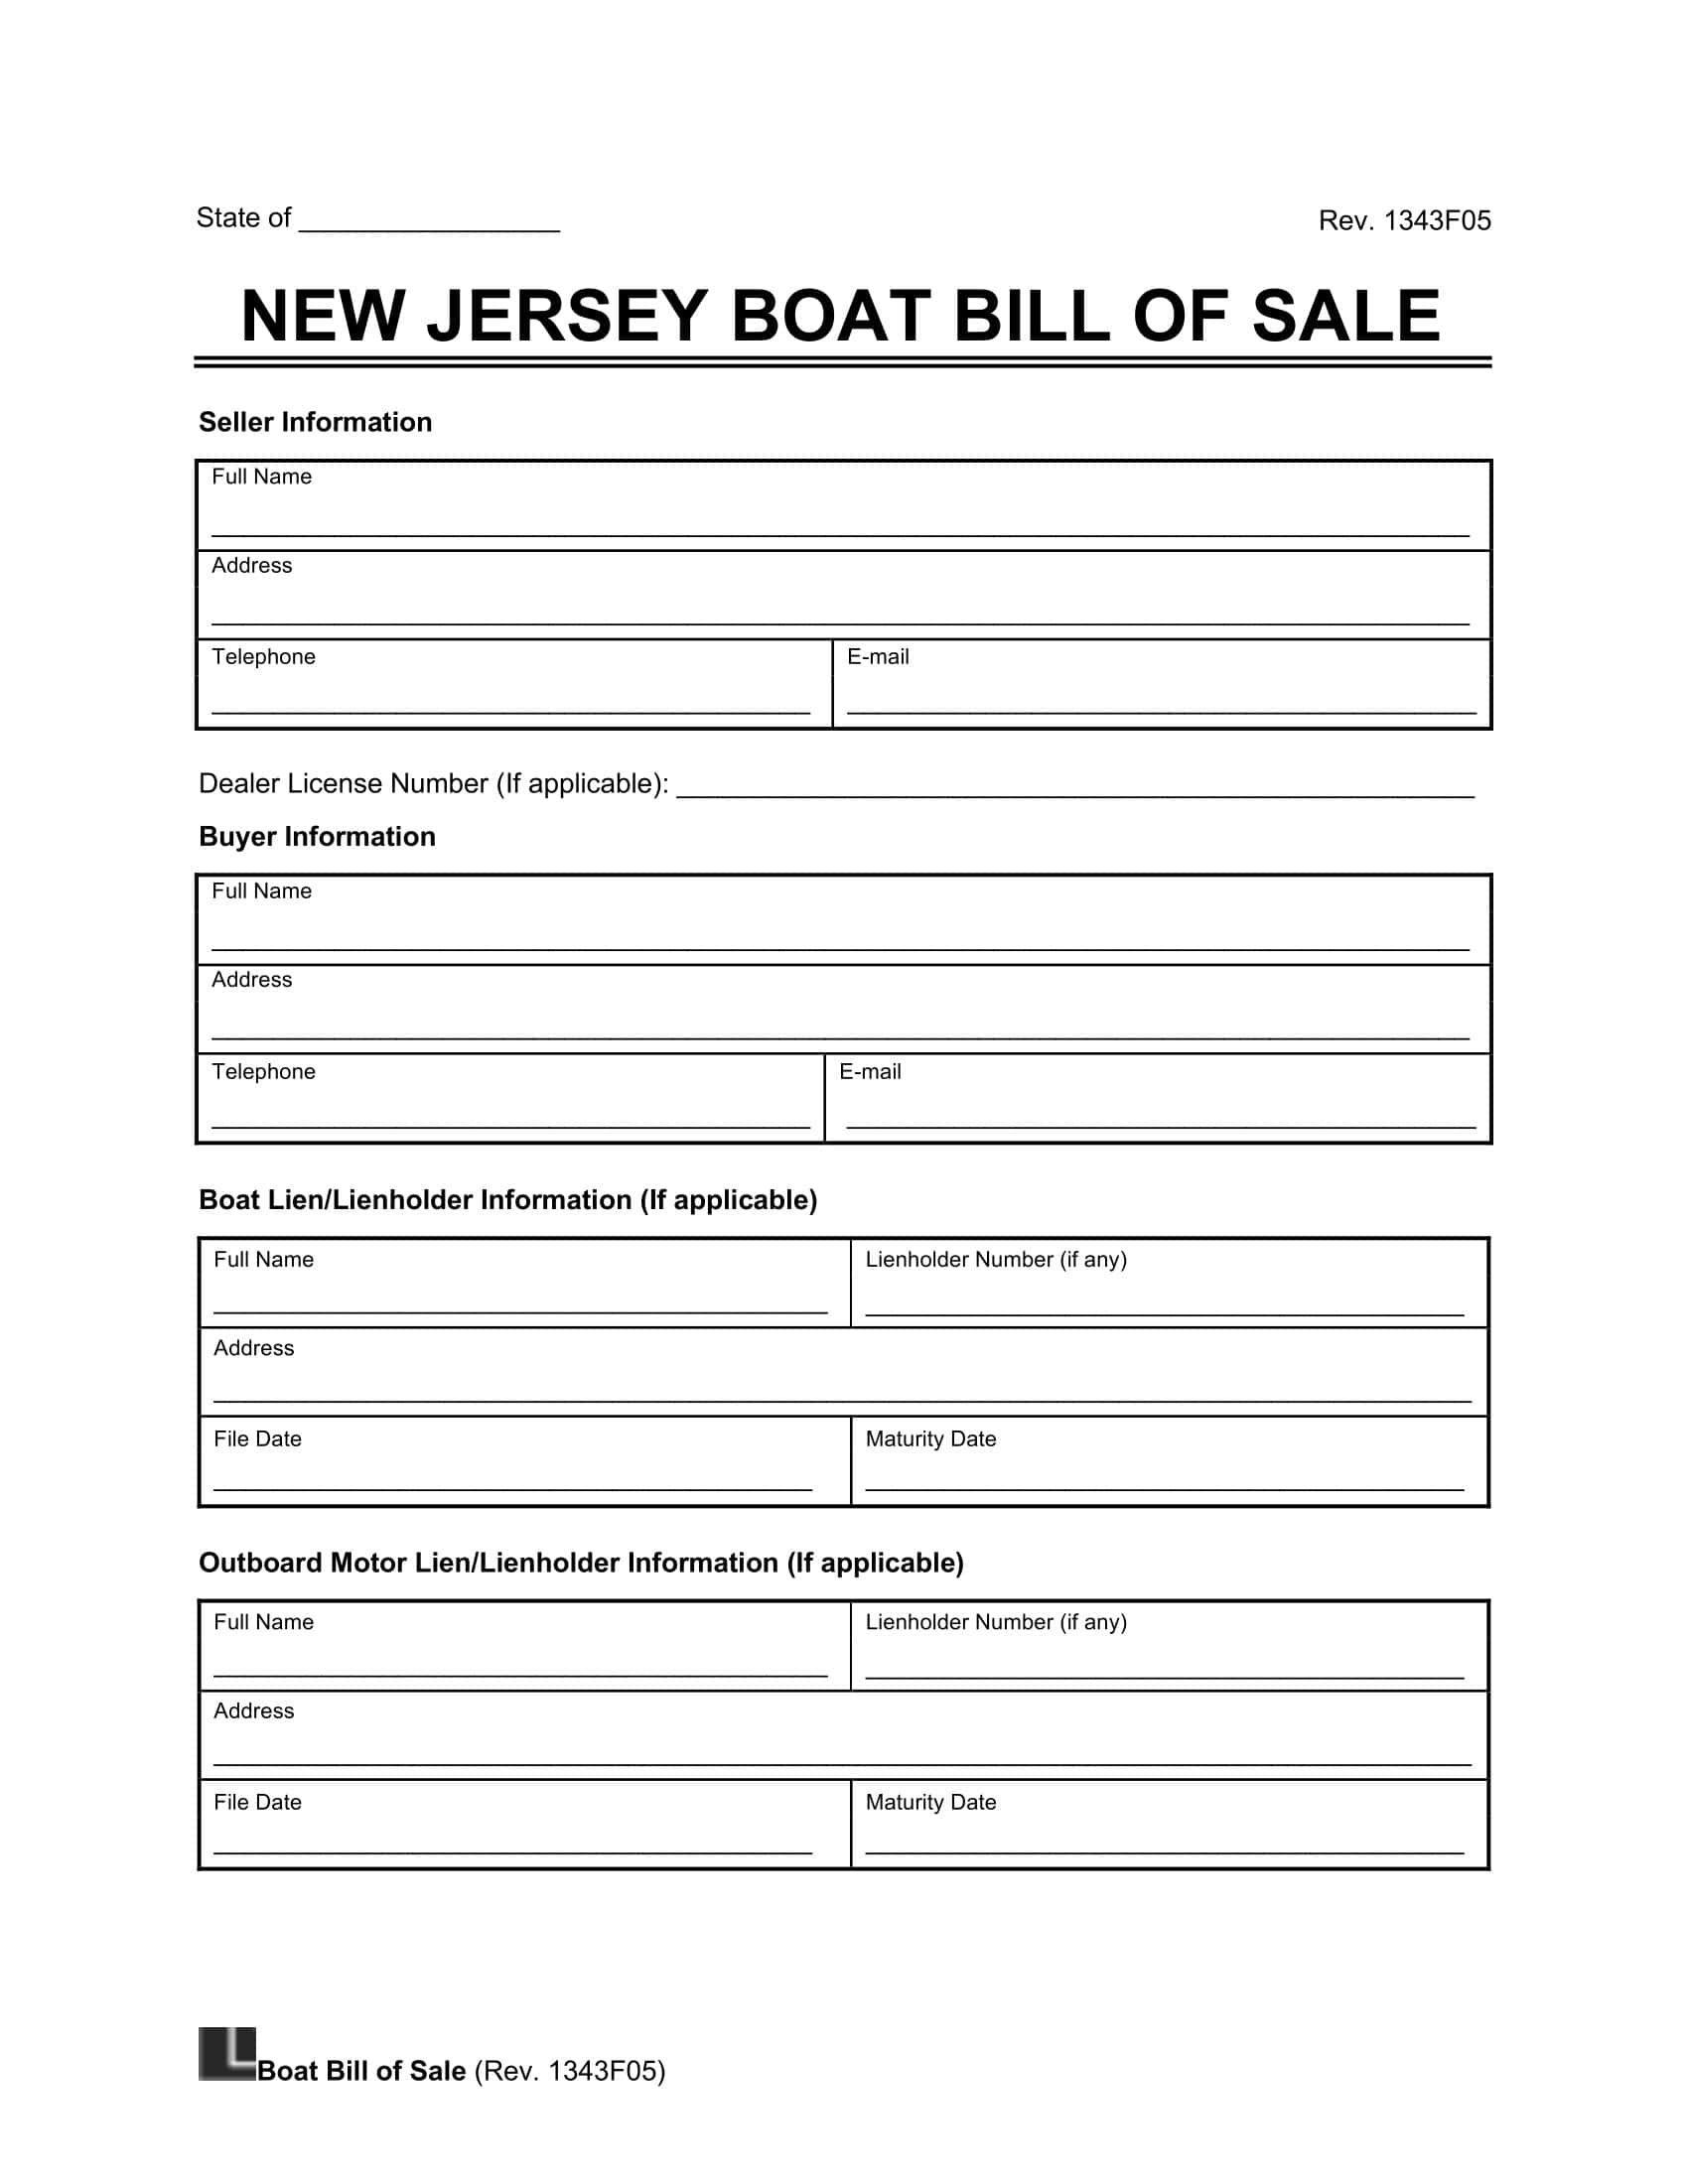 New Jersey Boat Bill of Sale screenshot